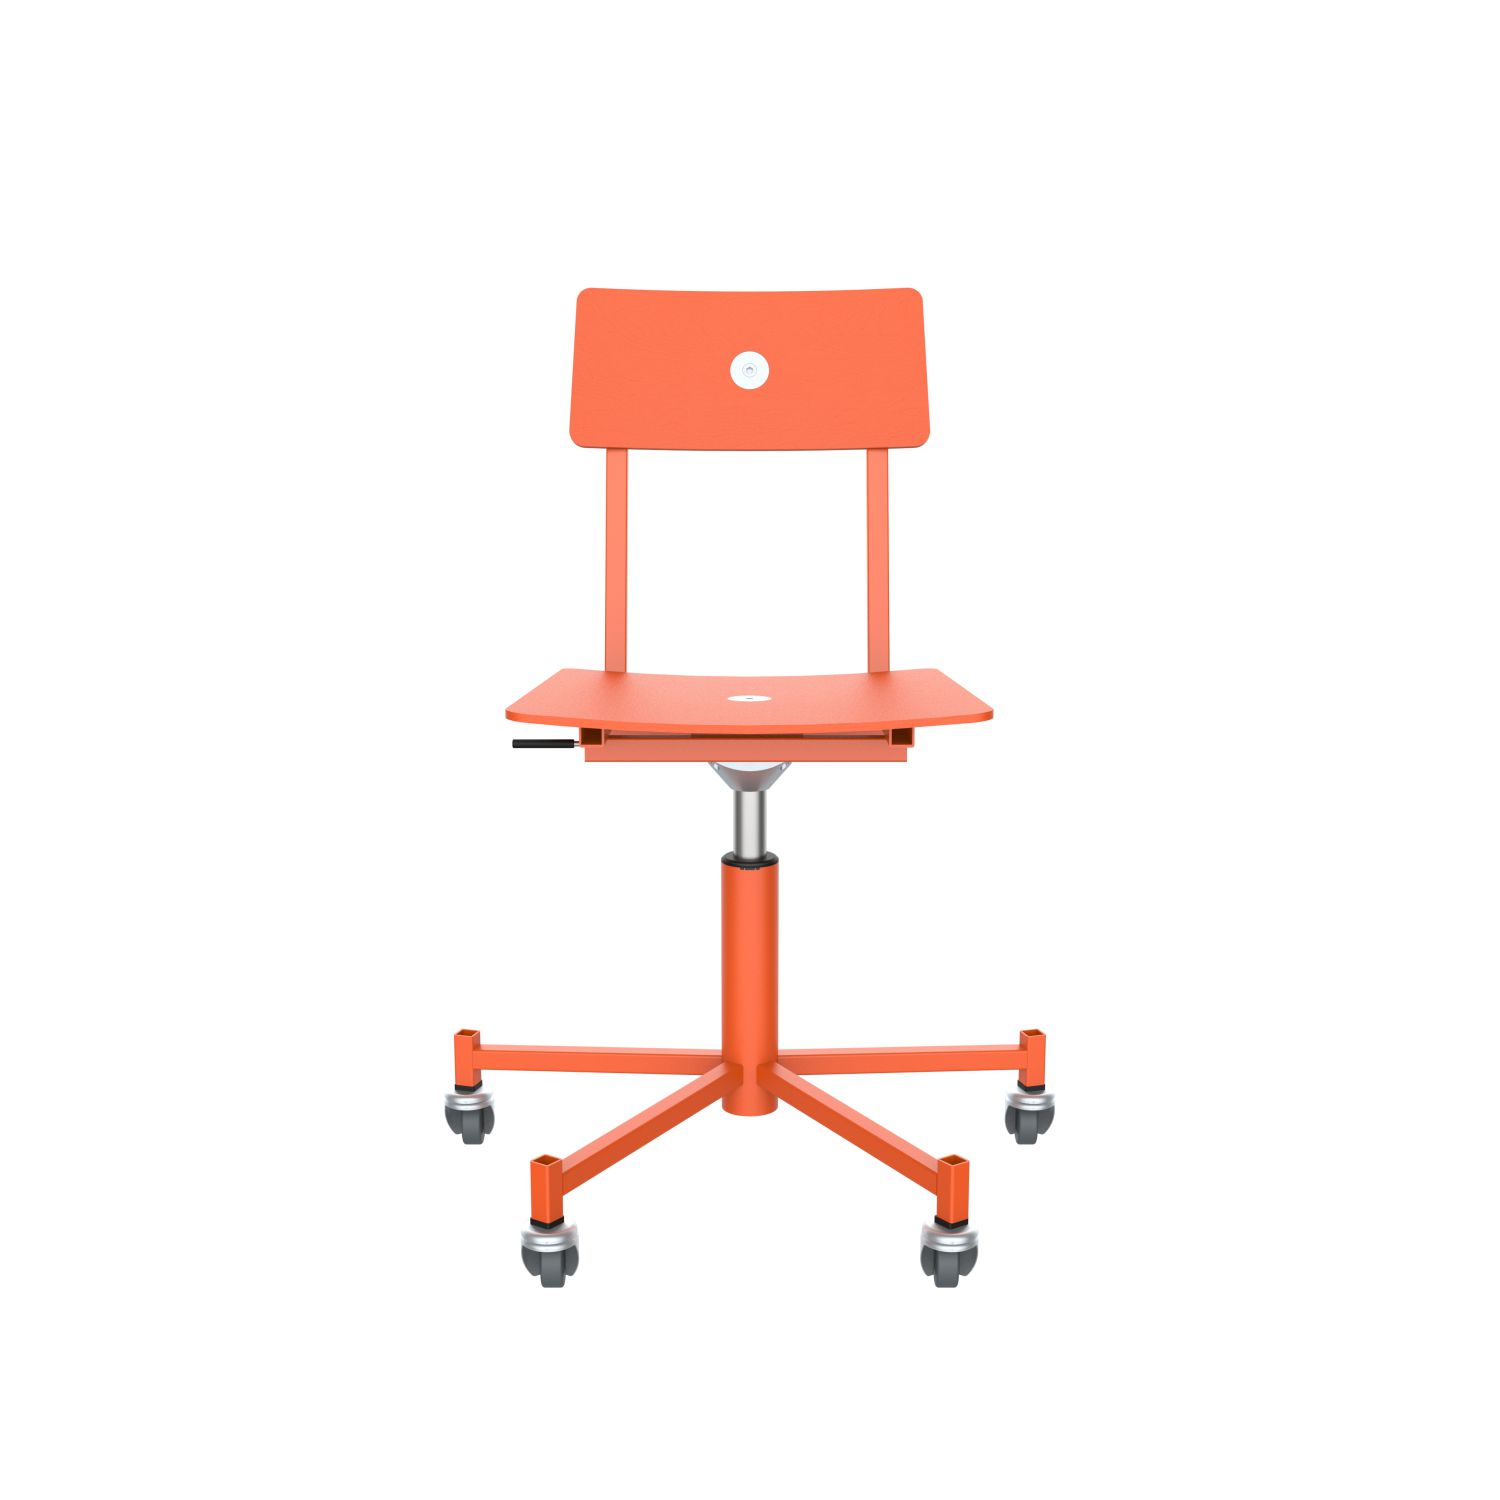 lensvelt piet hein eek mitw wooden office chair without armrests pure orange ral2004 pure orange ral2004 with wheels